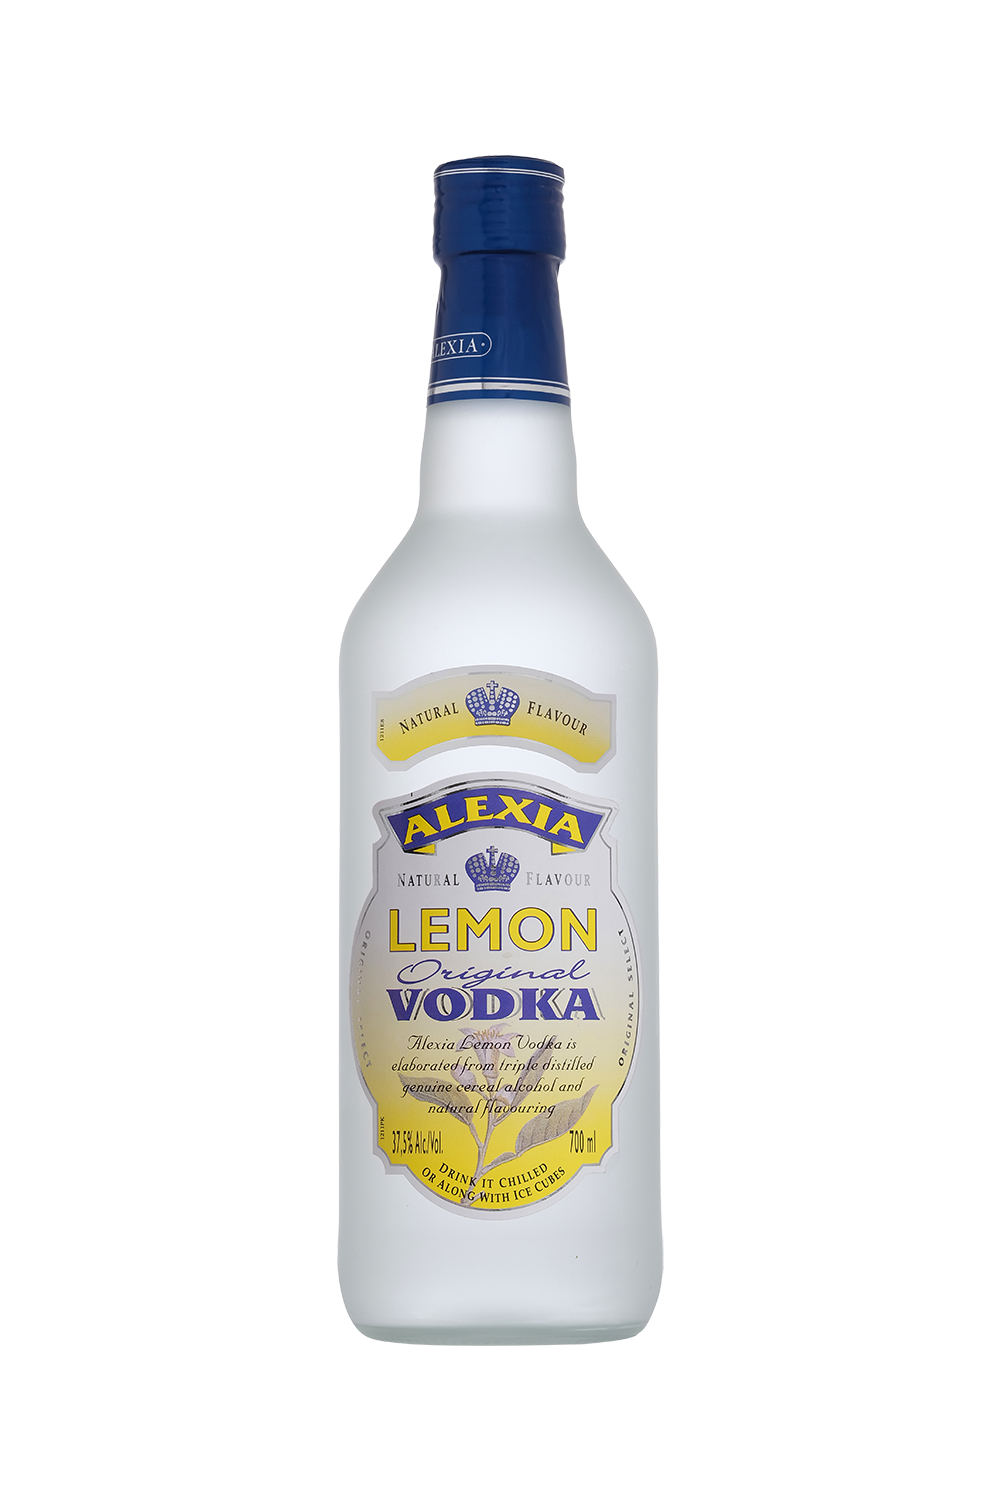 Vodka Lemon Alexia 070 37.5 0V20 Web